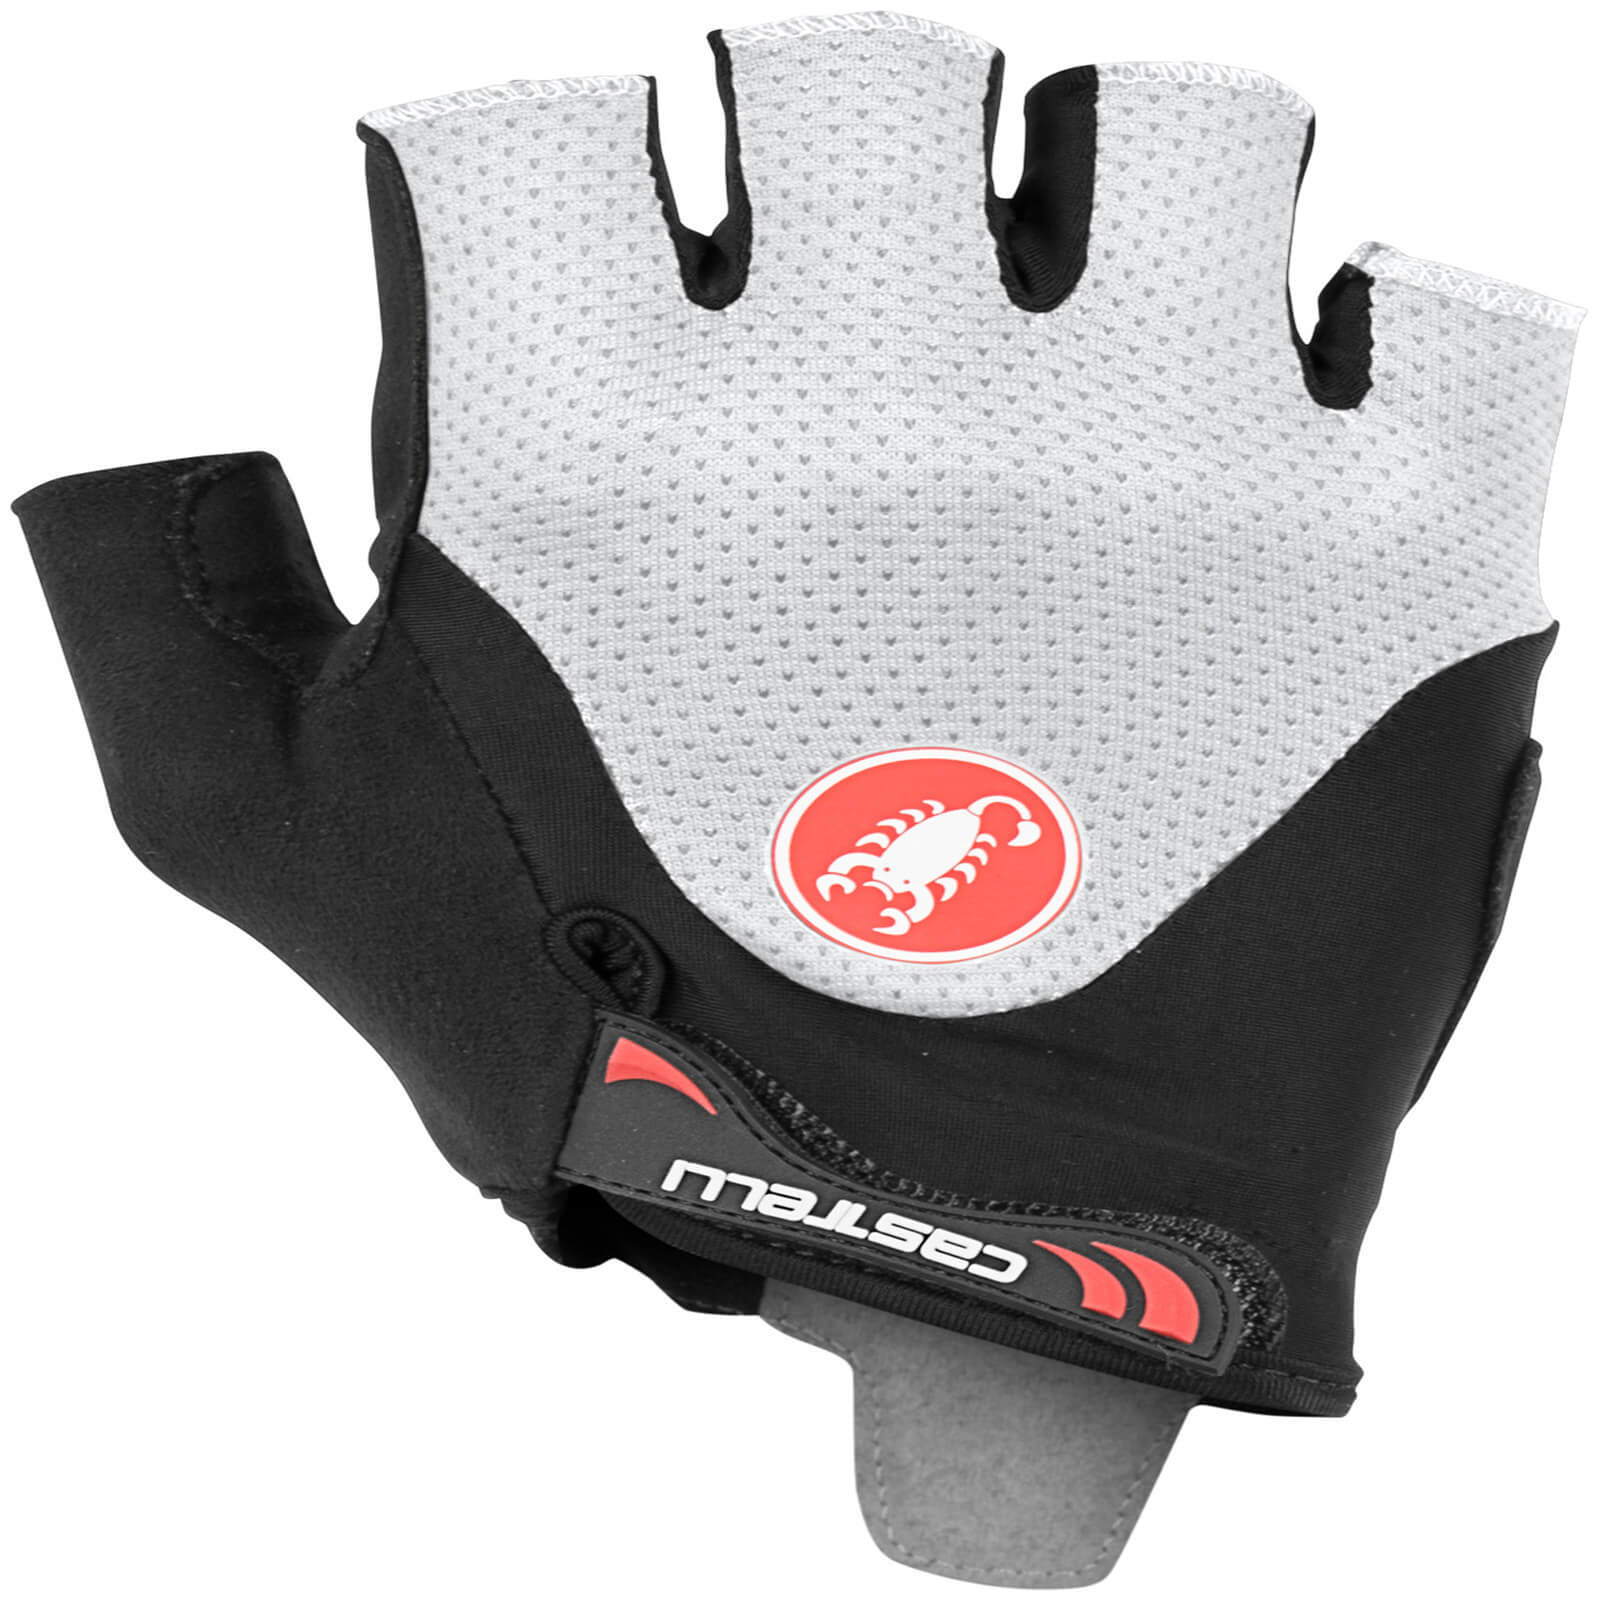 Castelli Arenberg Gel 2 Gloves - S - Black/Ivory